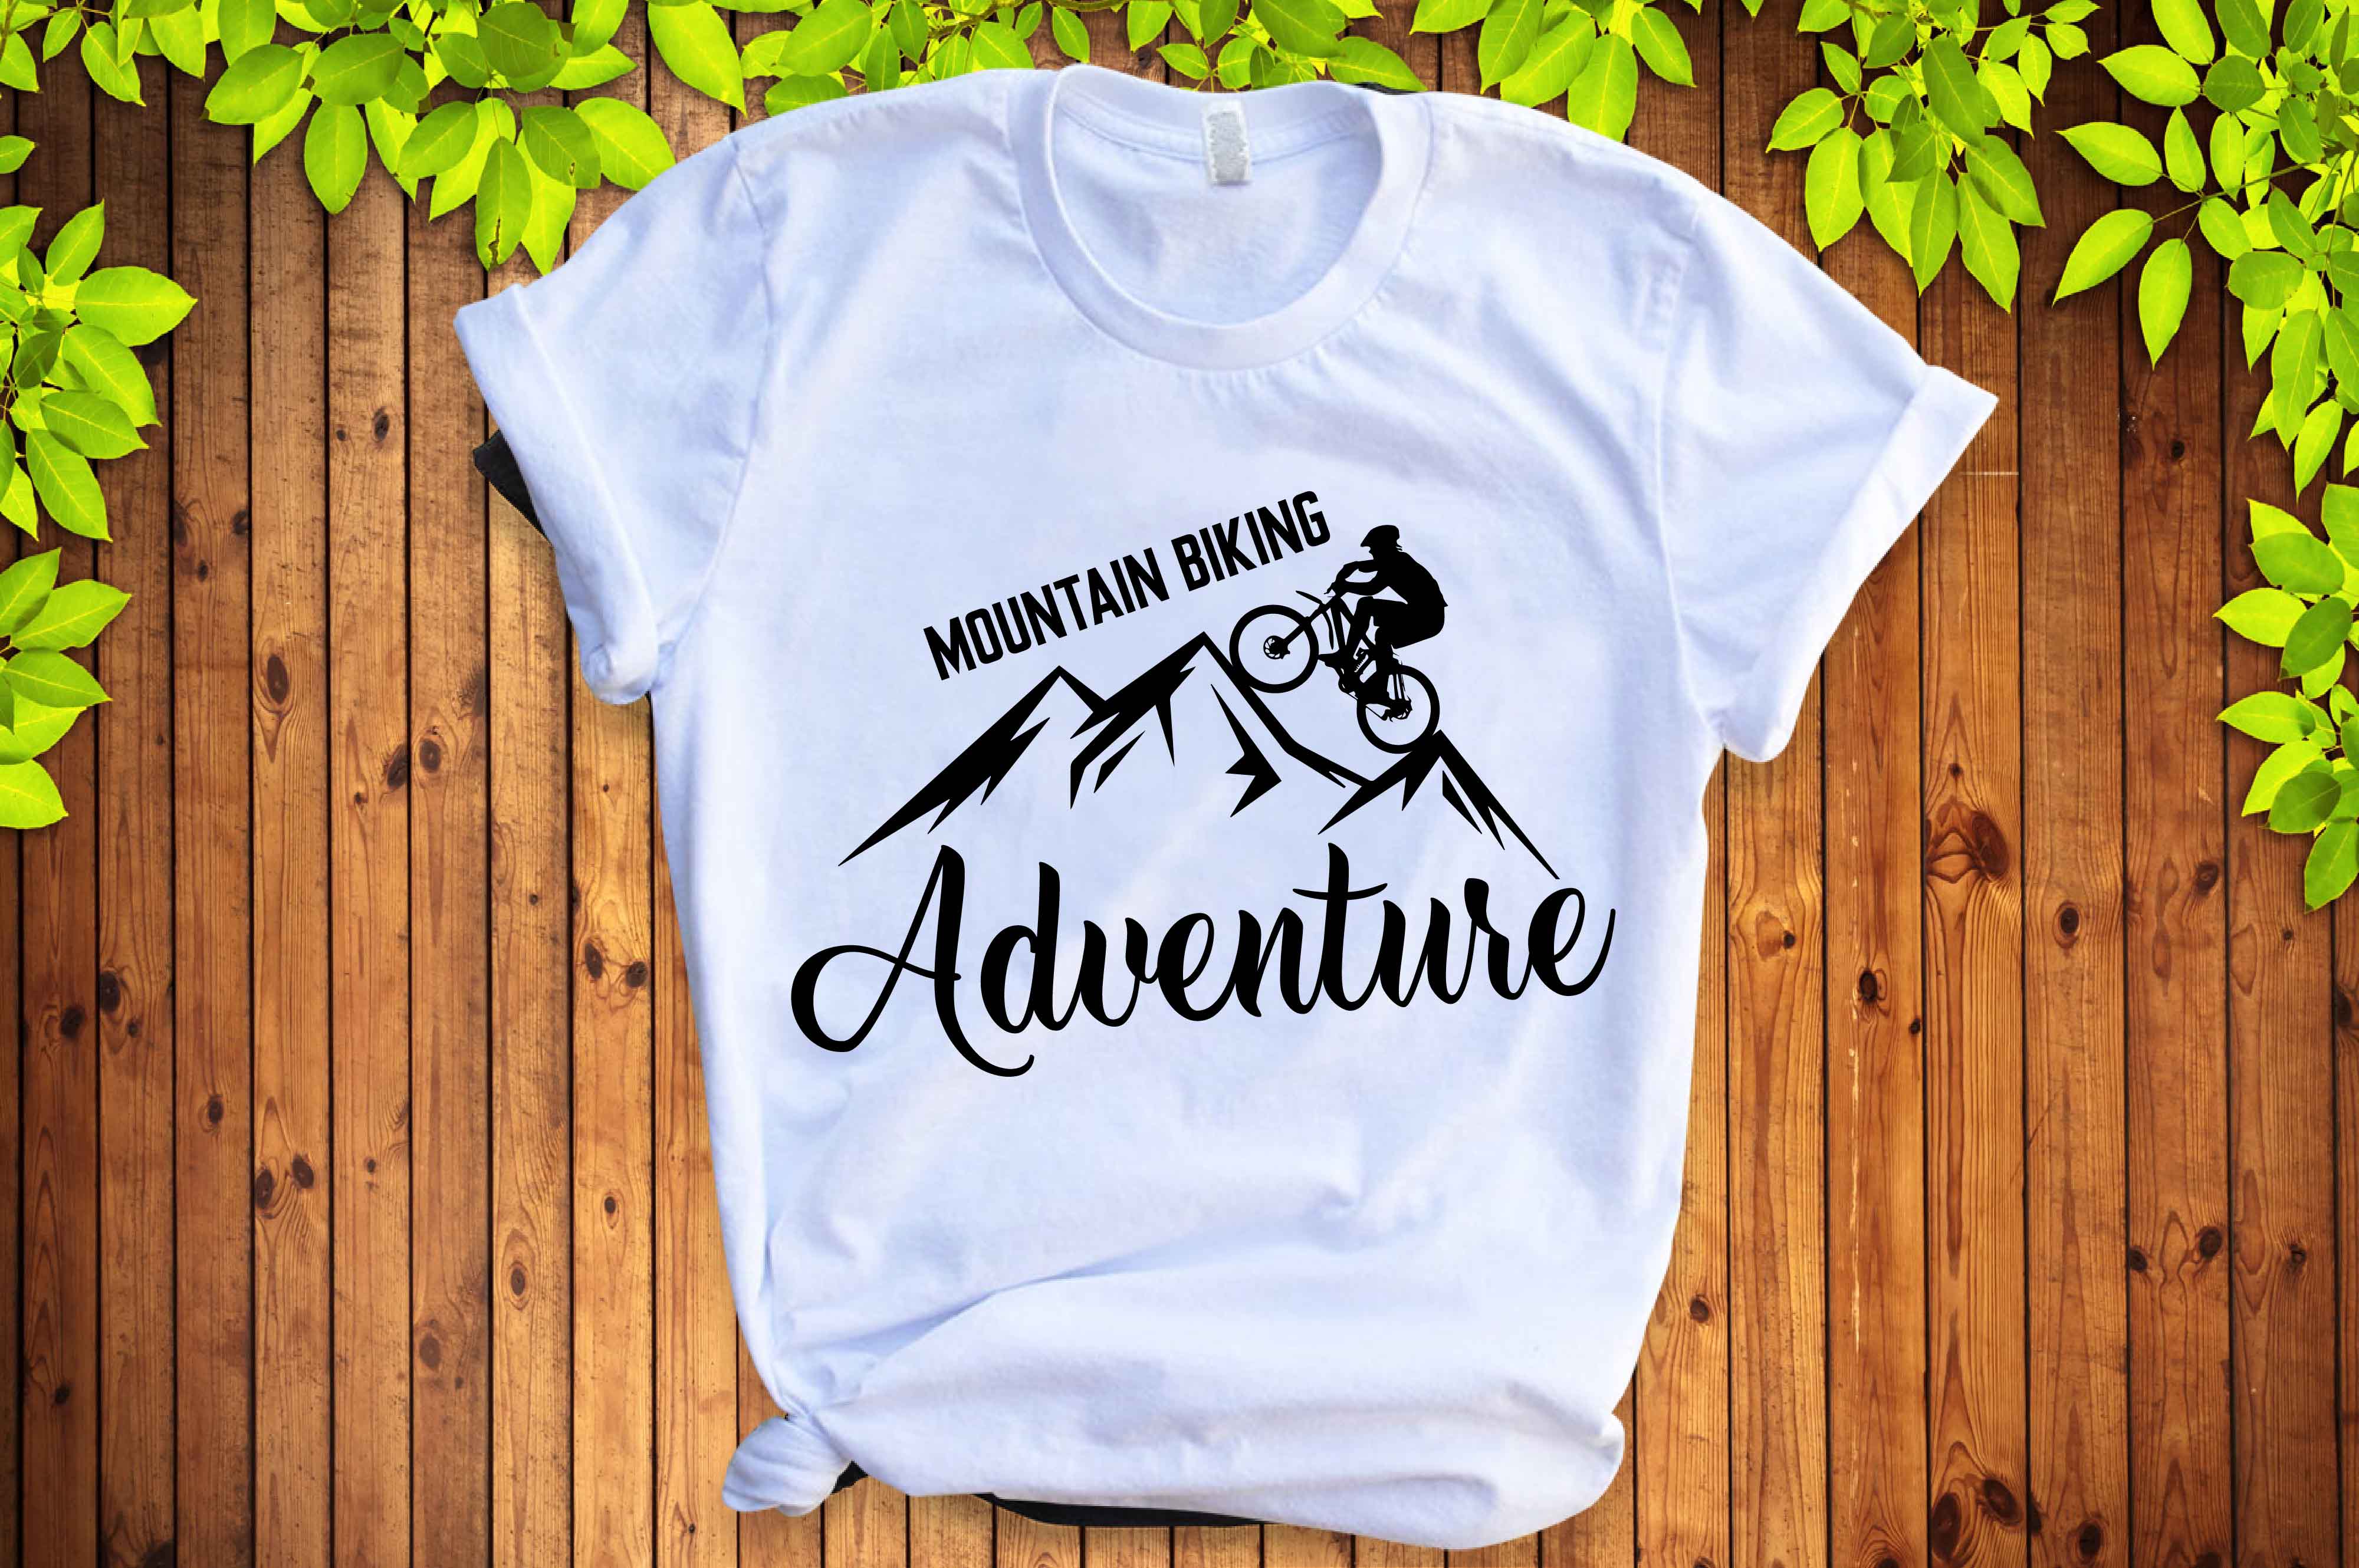 T - shirt that says mountain biking adventure on it.